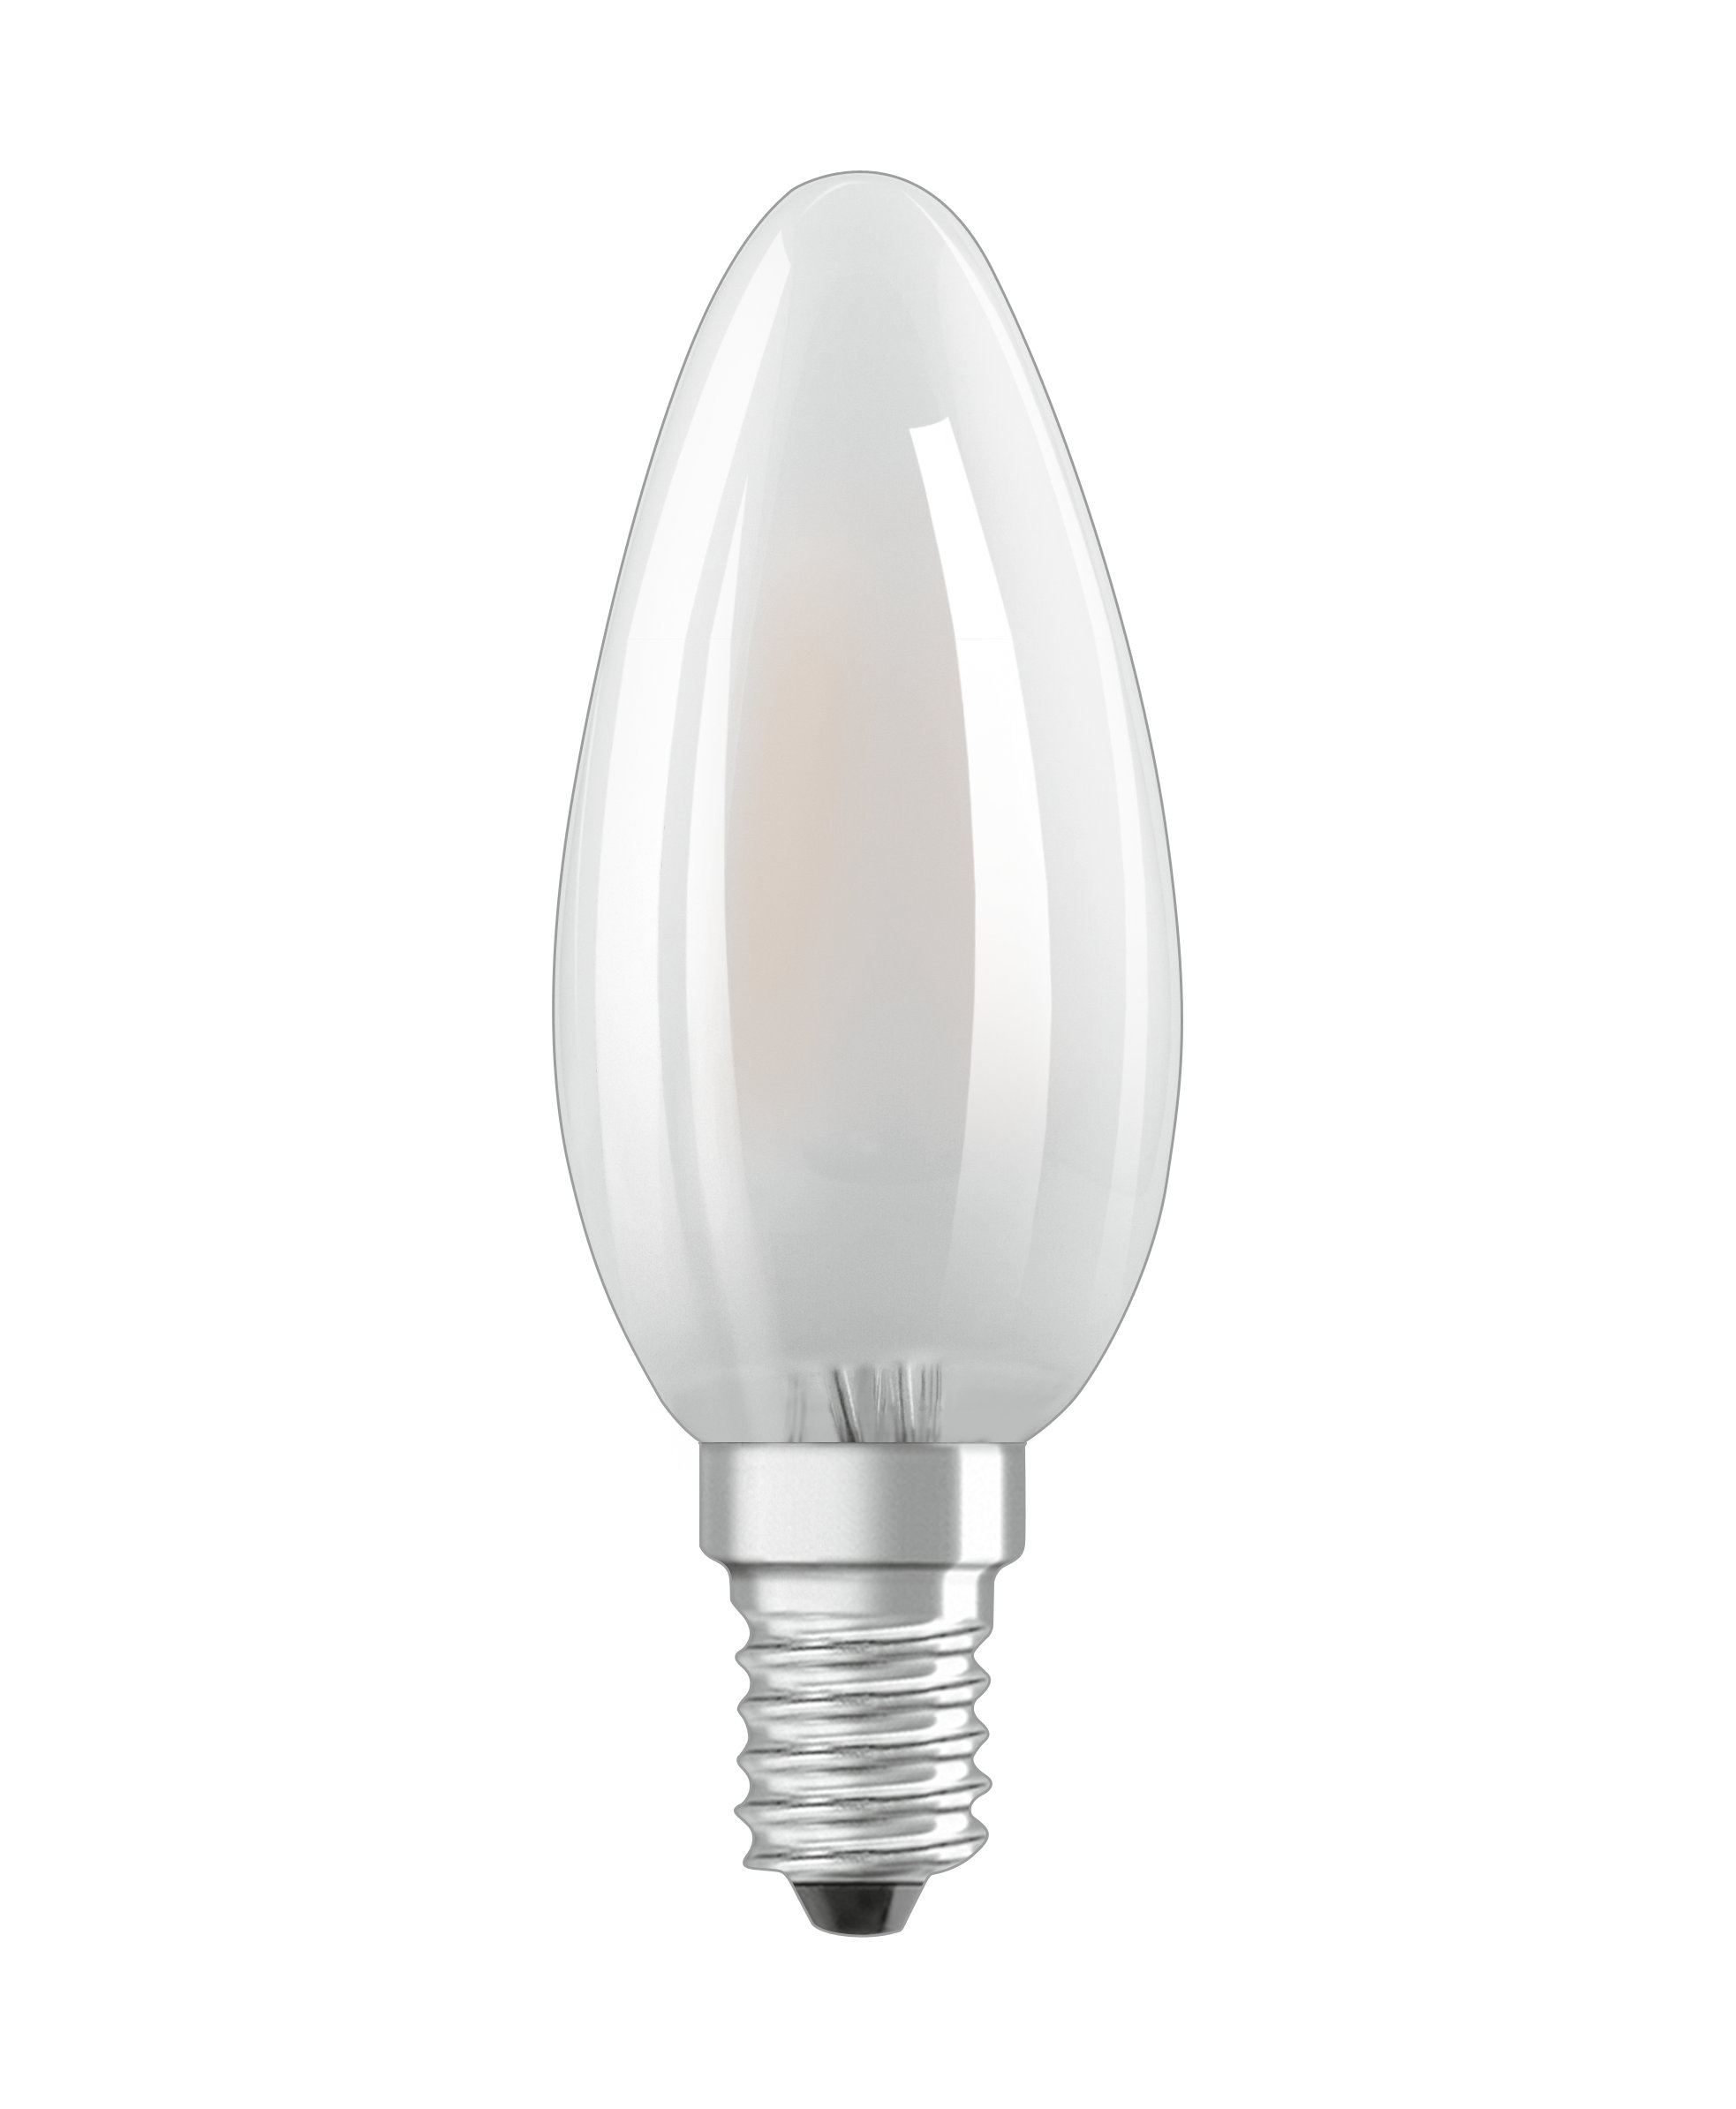 CLASSIC Lumen 470 OSRAM  LED LED B Lampe Retrofit Kaltweiß